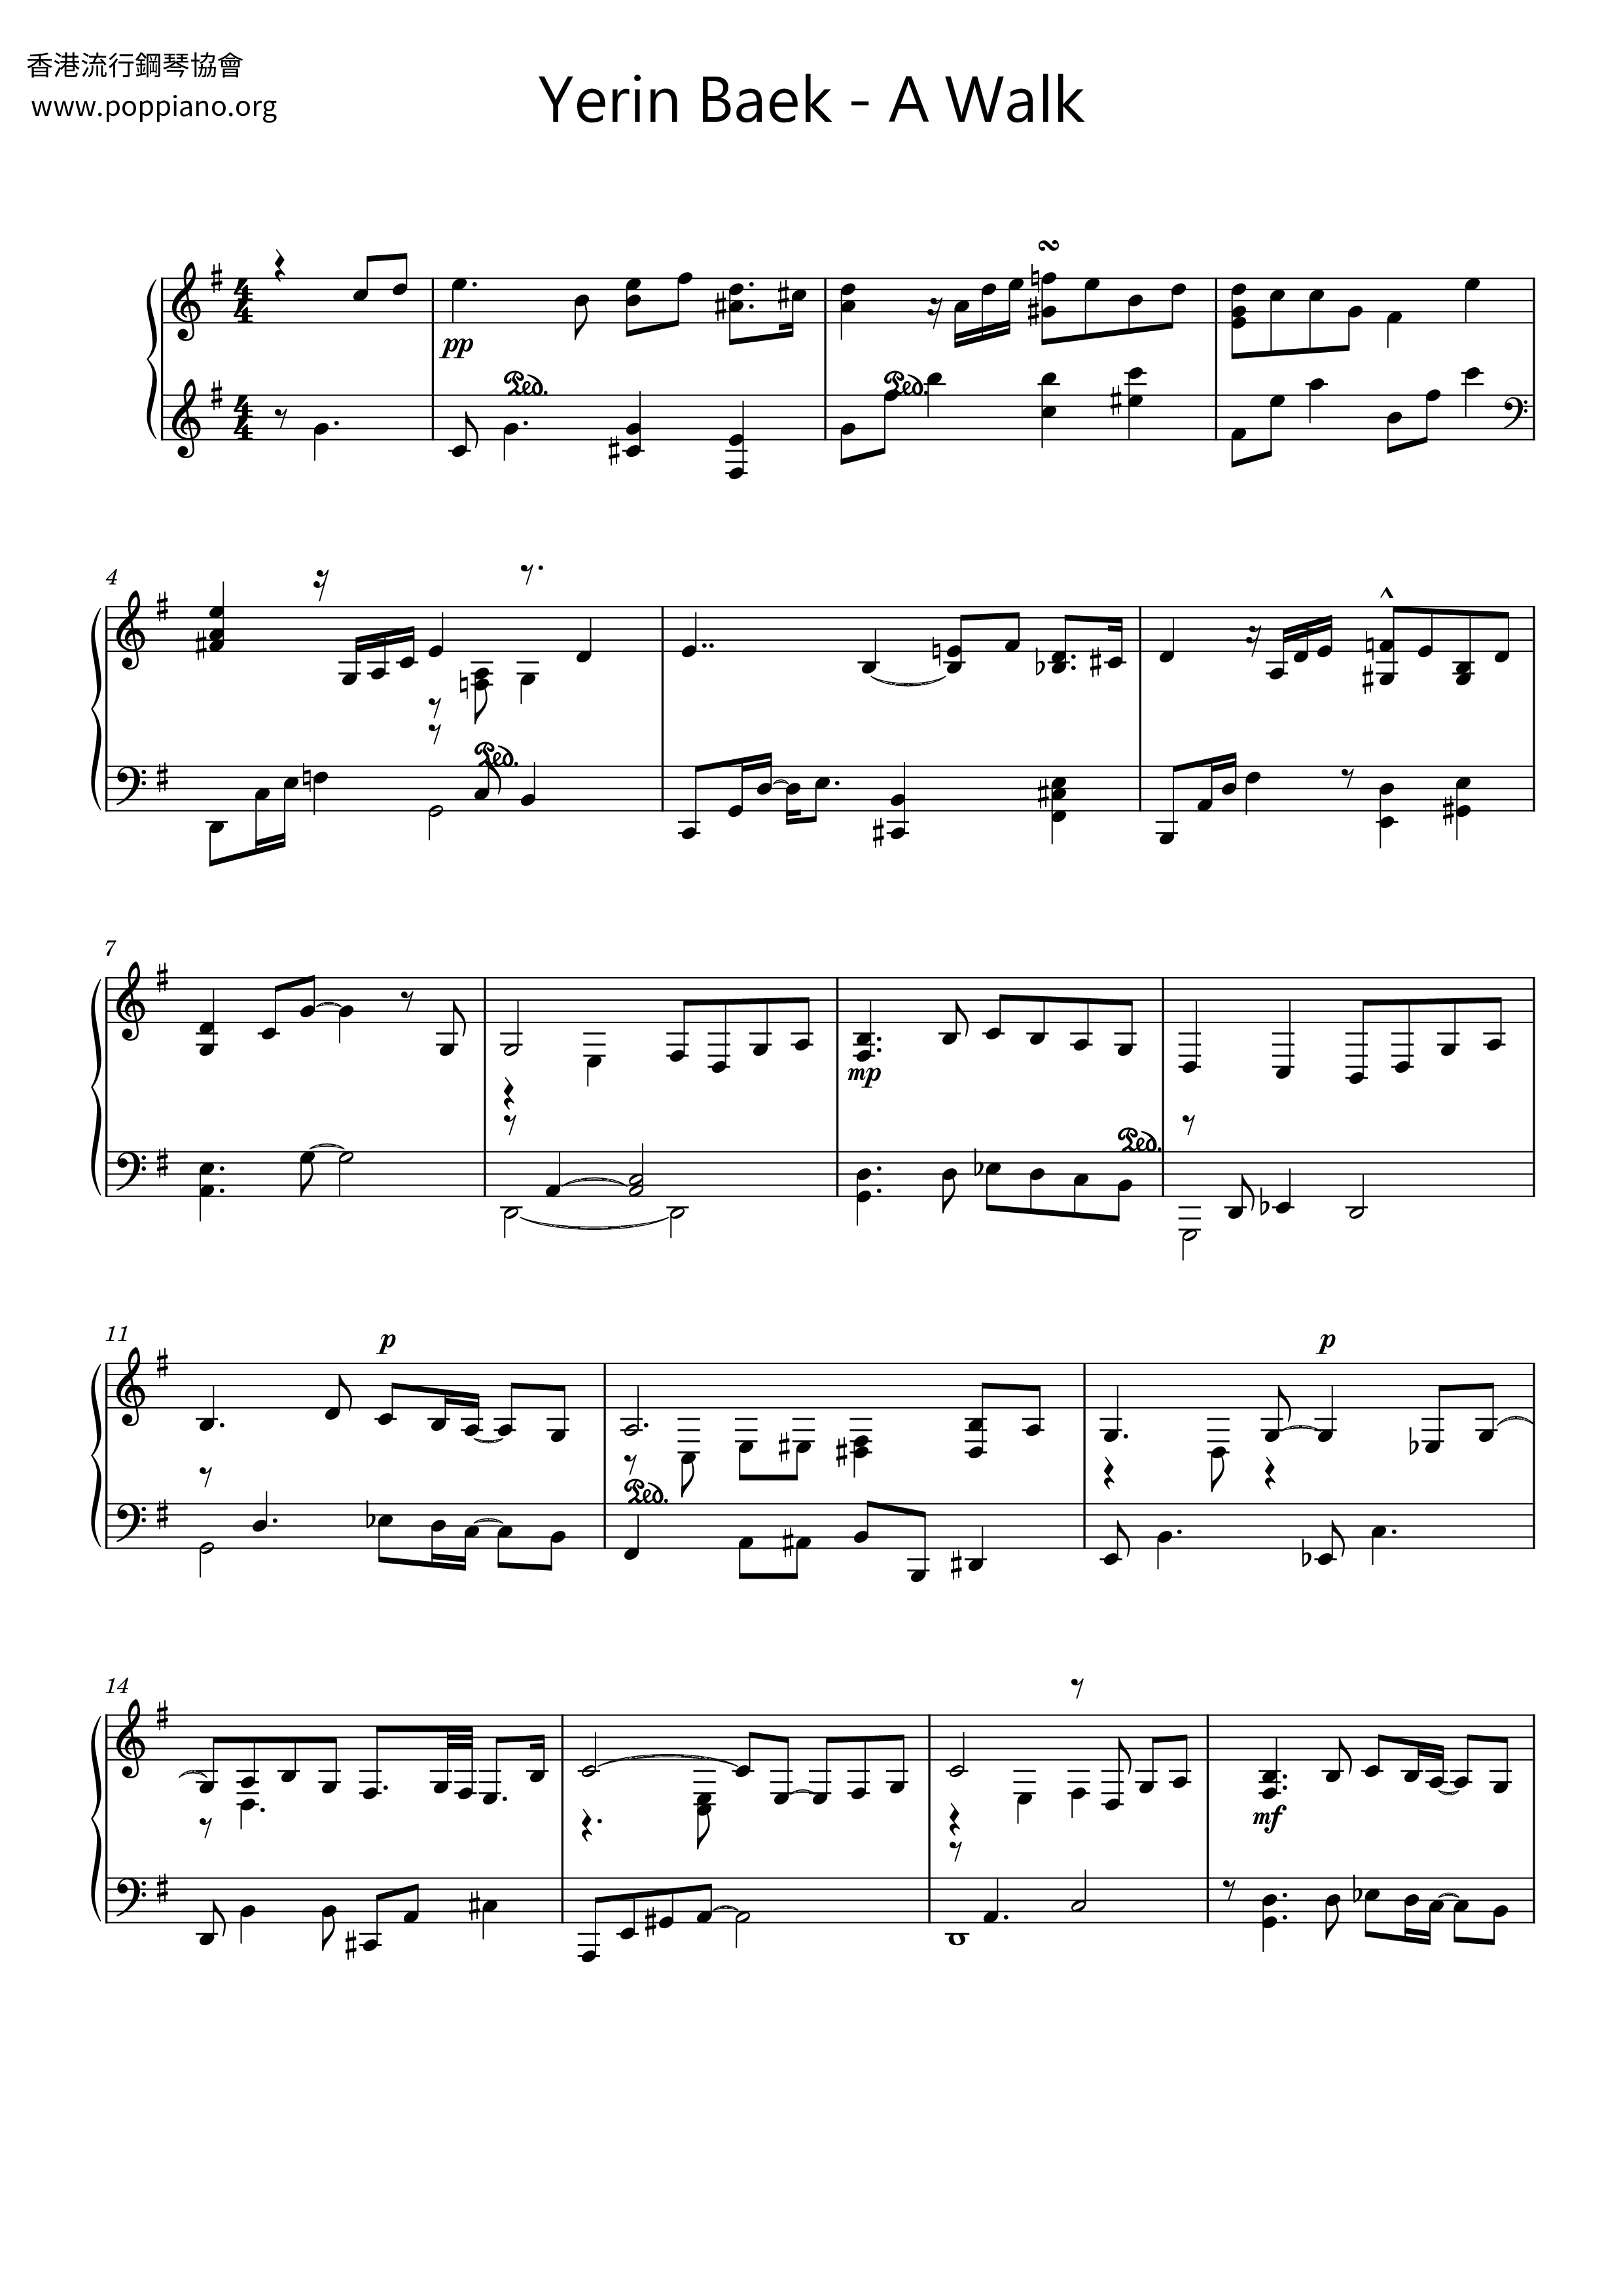 ☆ Walk, Sheet Music, Piano Score Free PDF Download